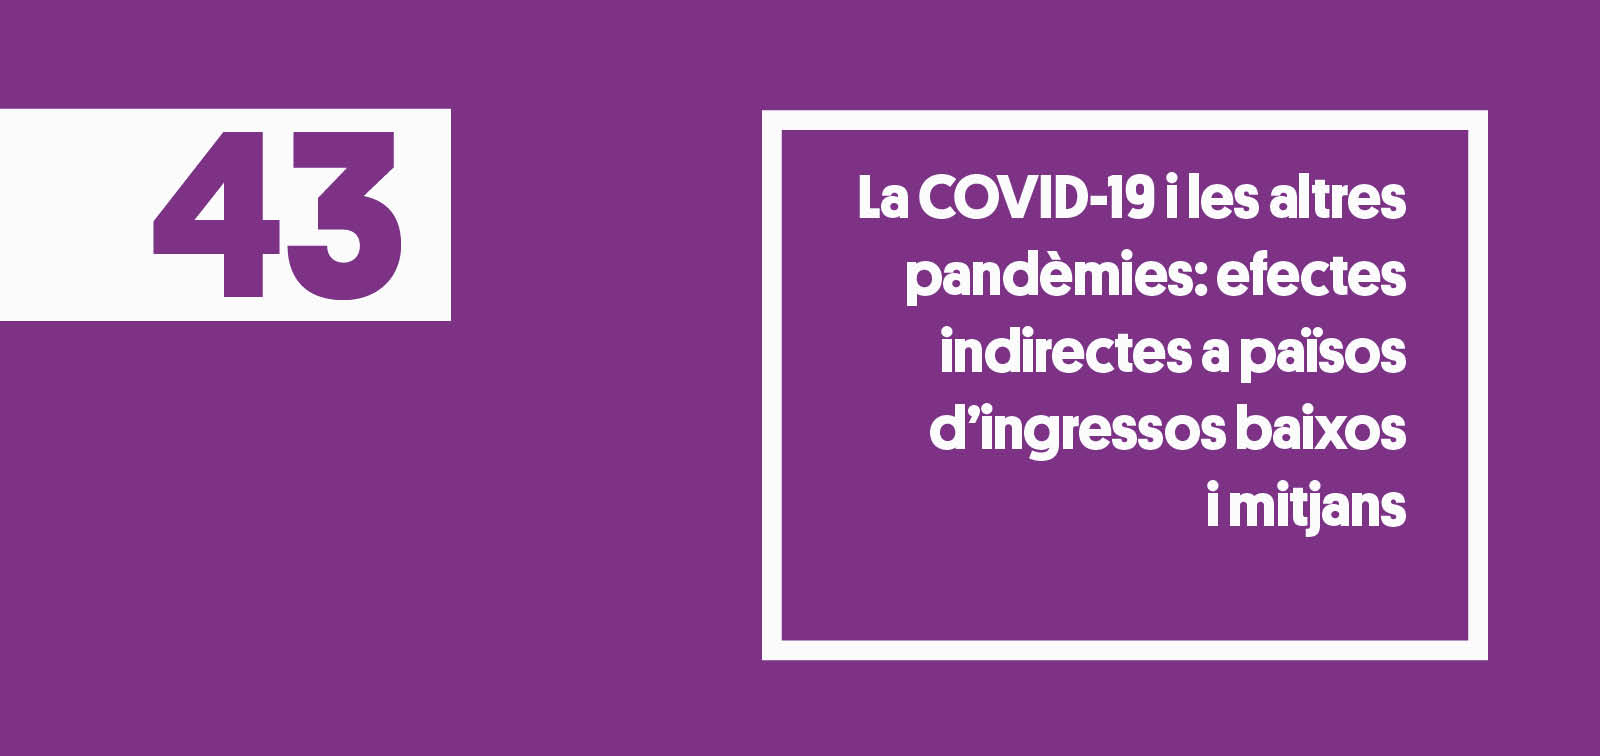 COVID19 pandemies paisos baixos ingressos